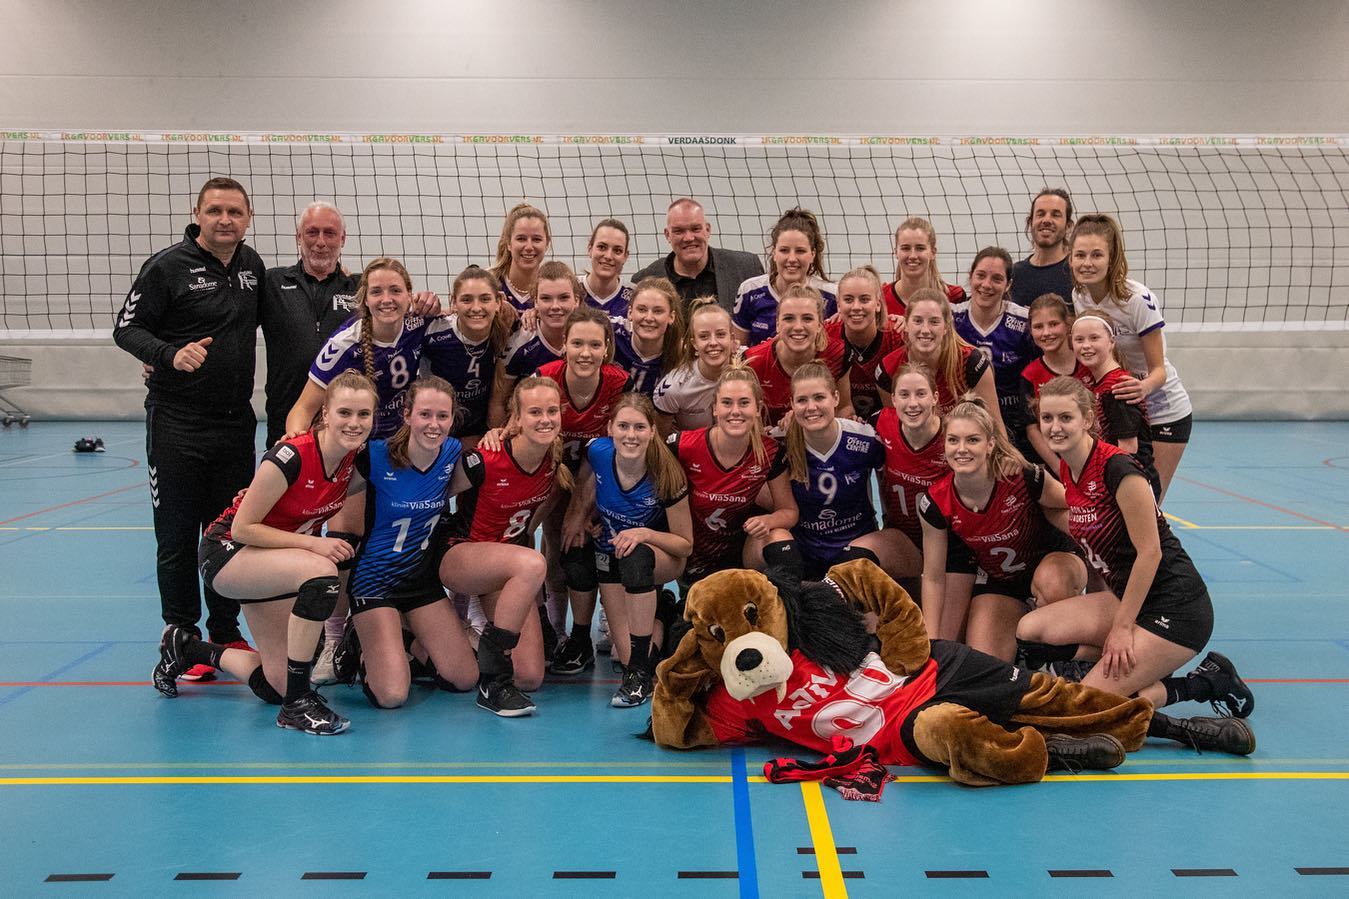 Bedachtzaam aangrenzend essay Seizoenslot Topdivisie Dames: SOMAS Activia - VoCASA 3-0. Afscheid Marloes  - VoCASA volleybal Nijmegen